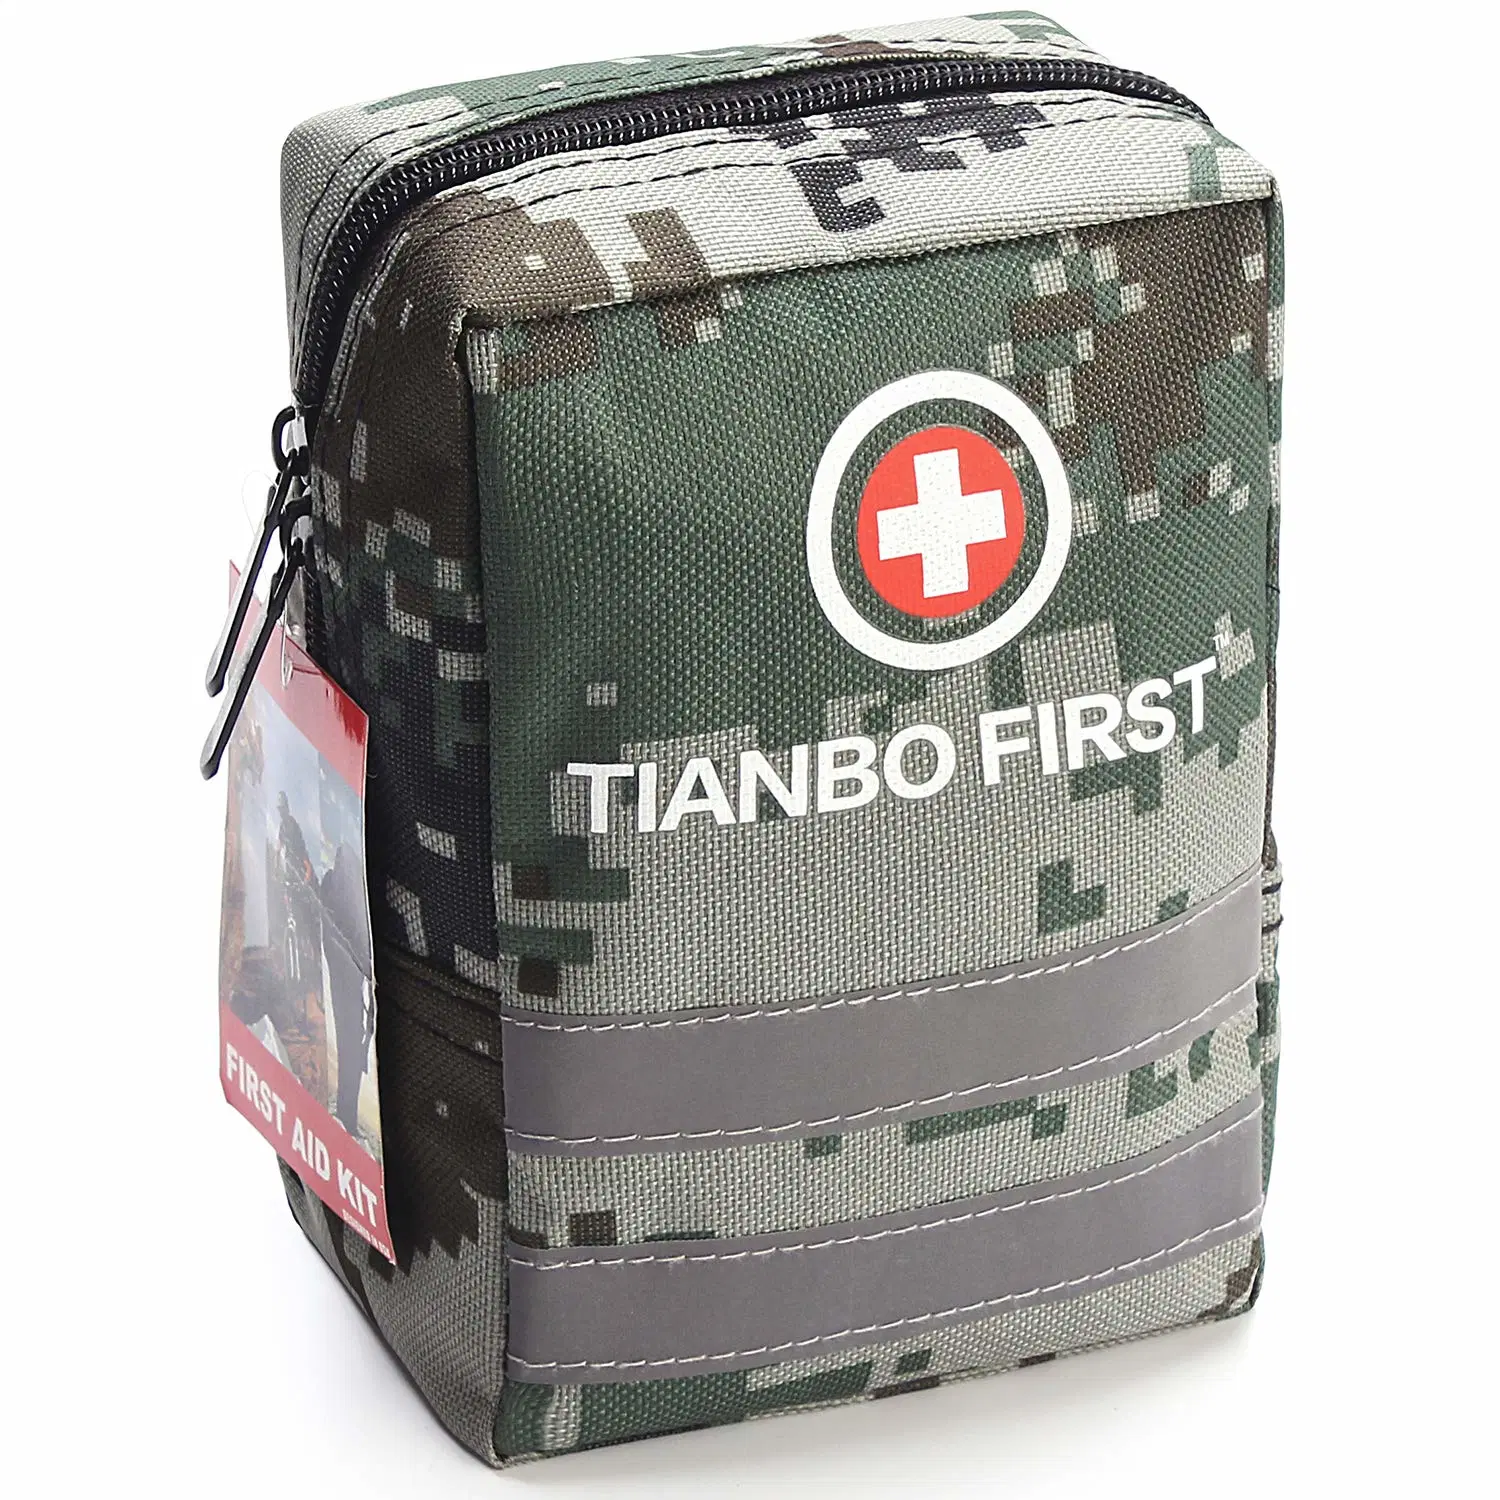 Caja de emergencia profesional certificado Equipo de supervivencia multifunción profesional médica primero Kit de ayuda